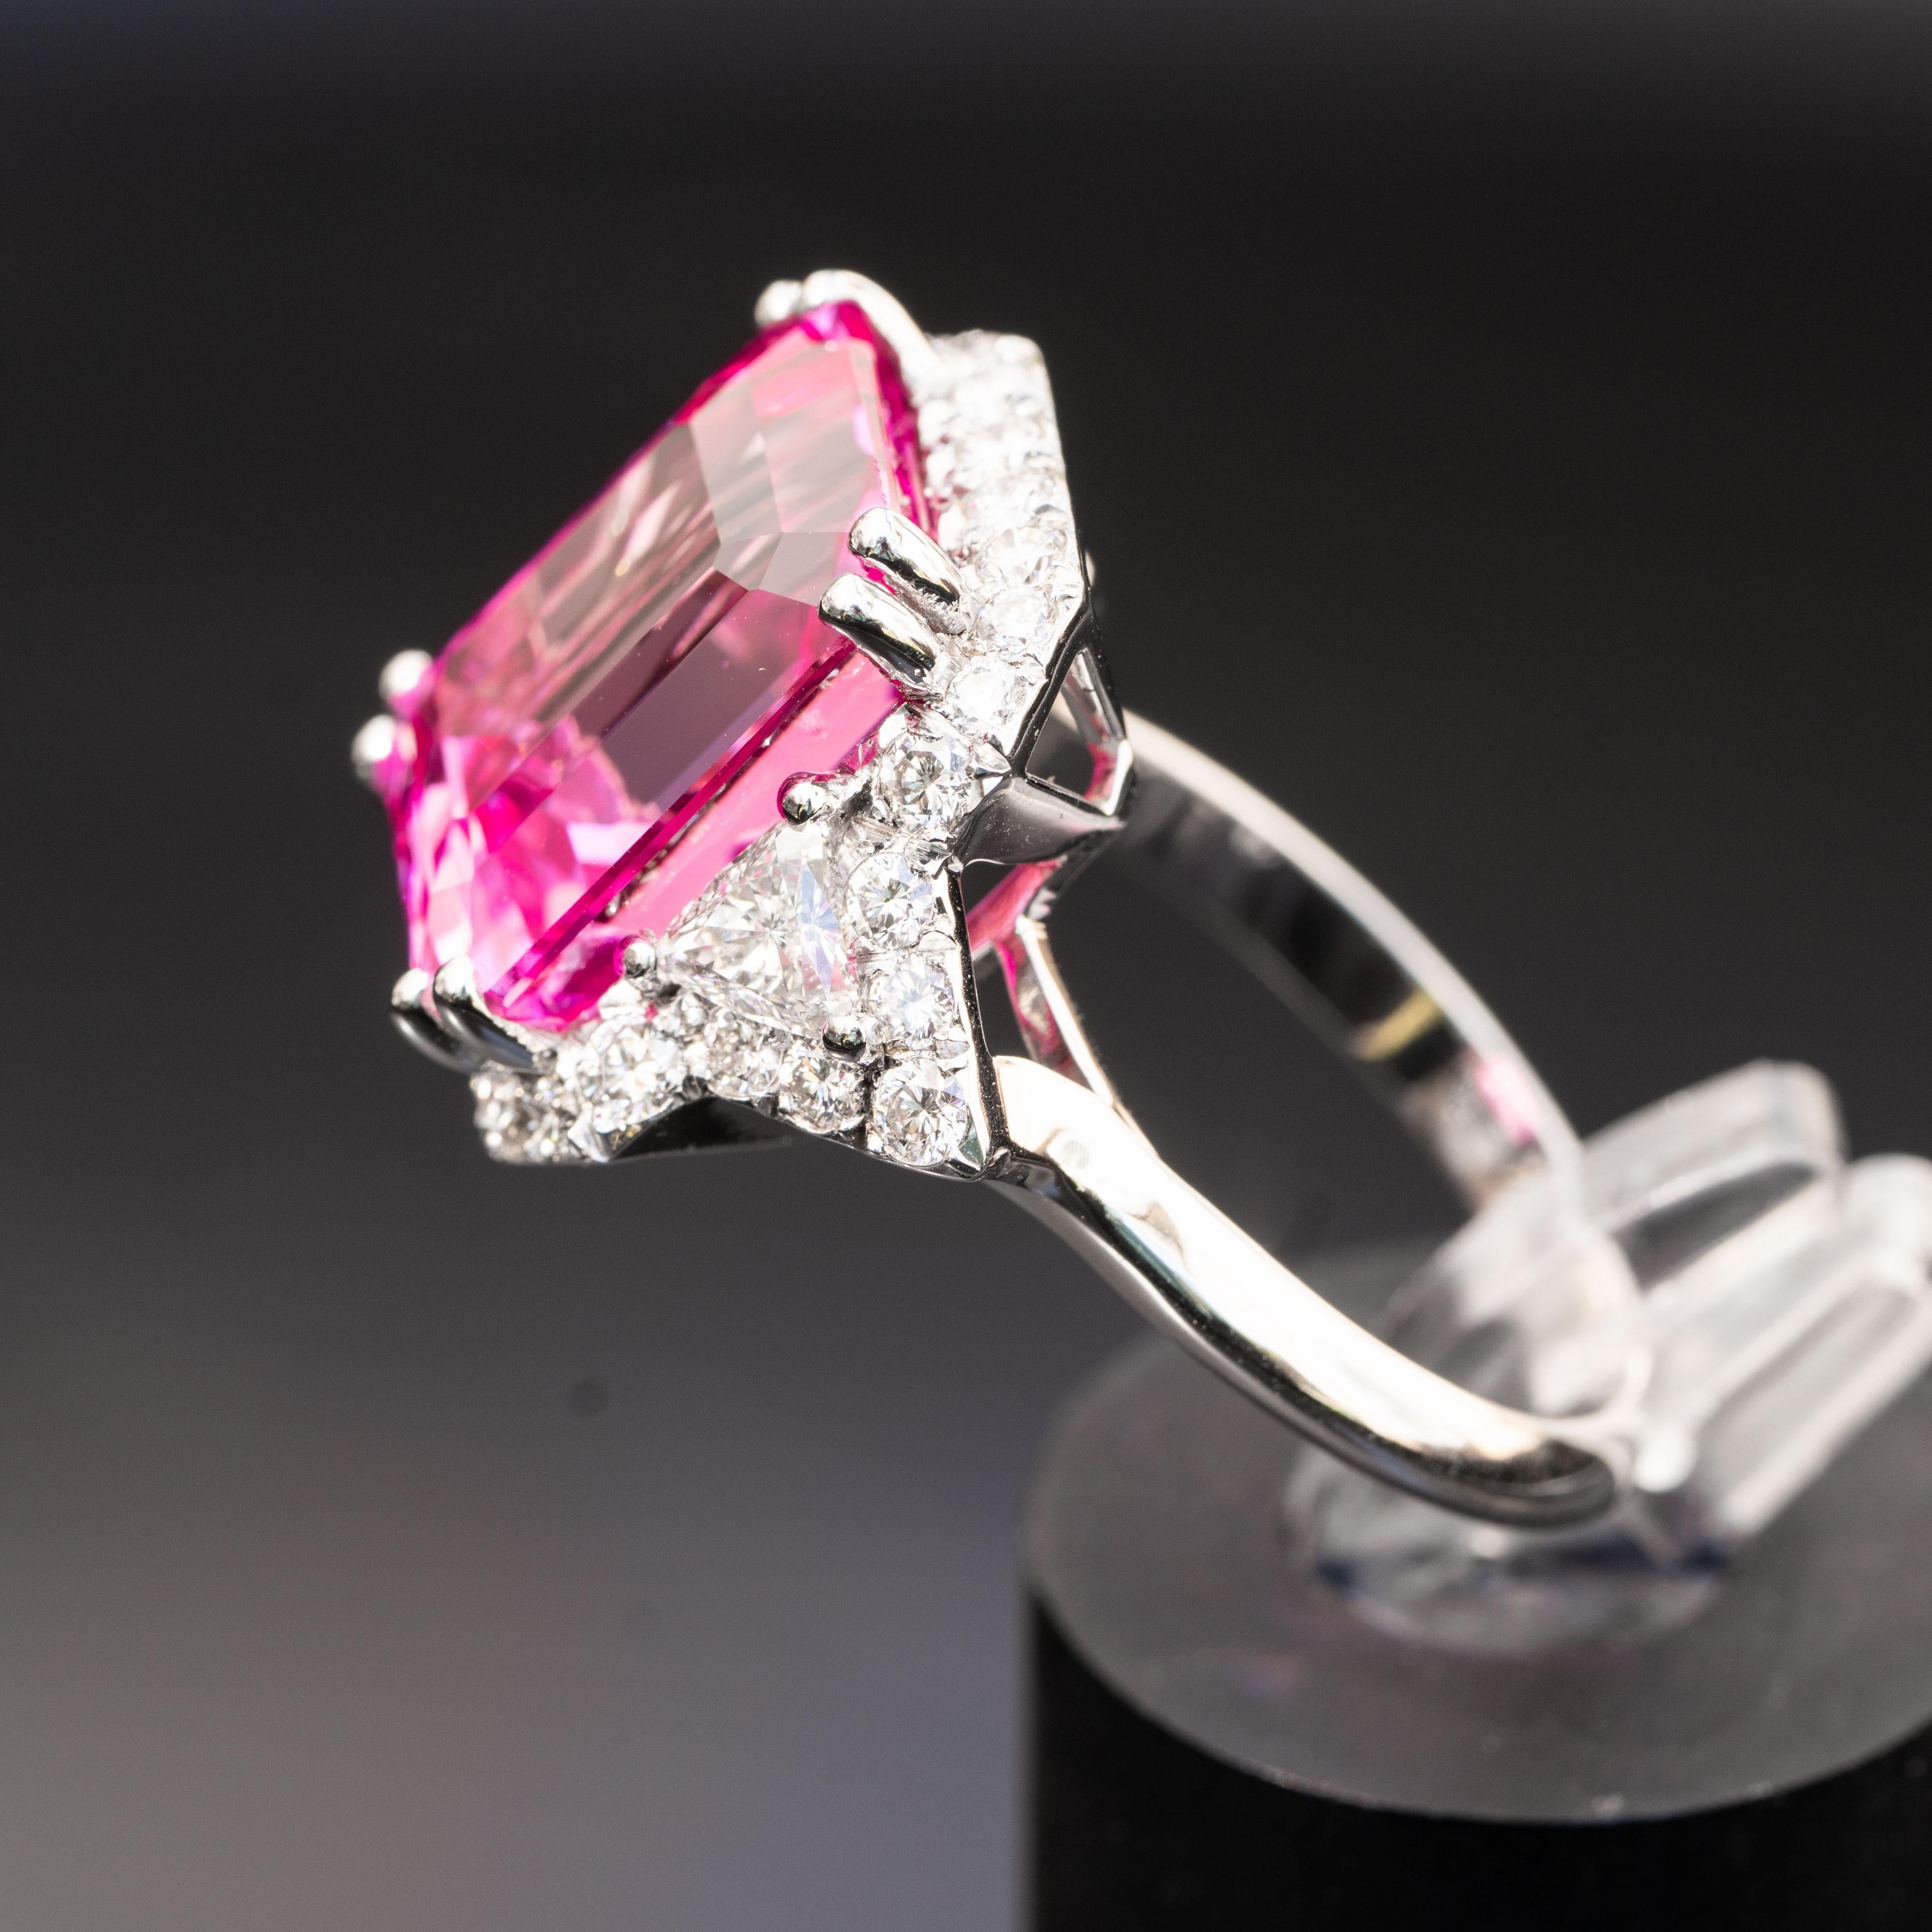 2 carat pink sapphire ring